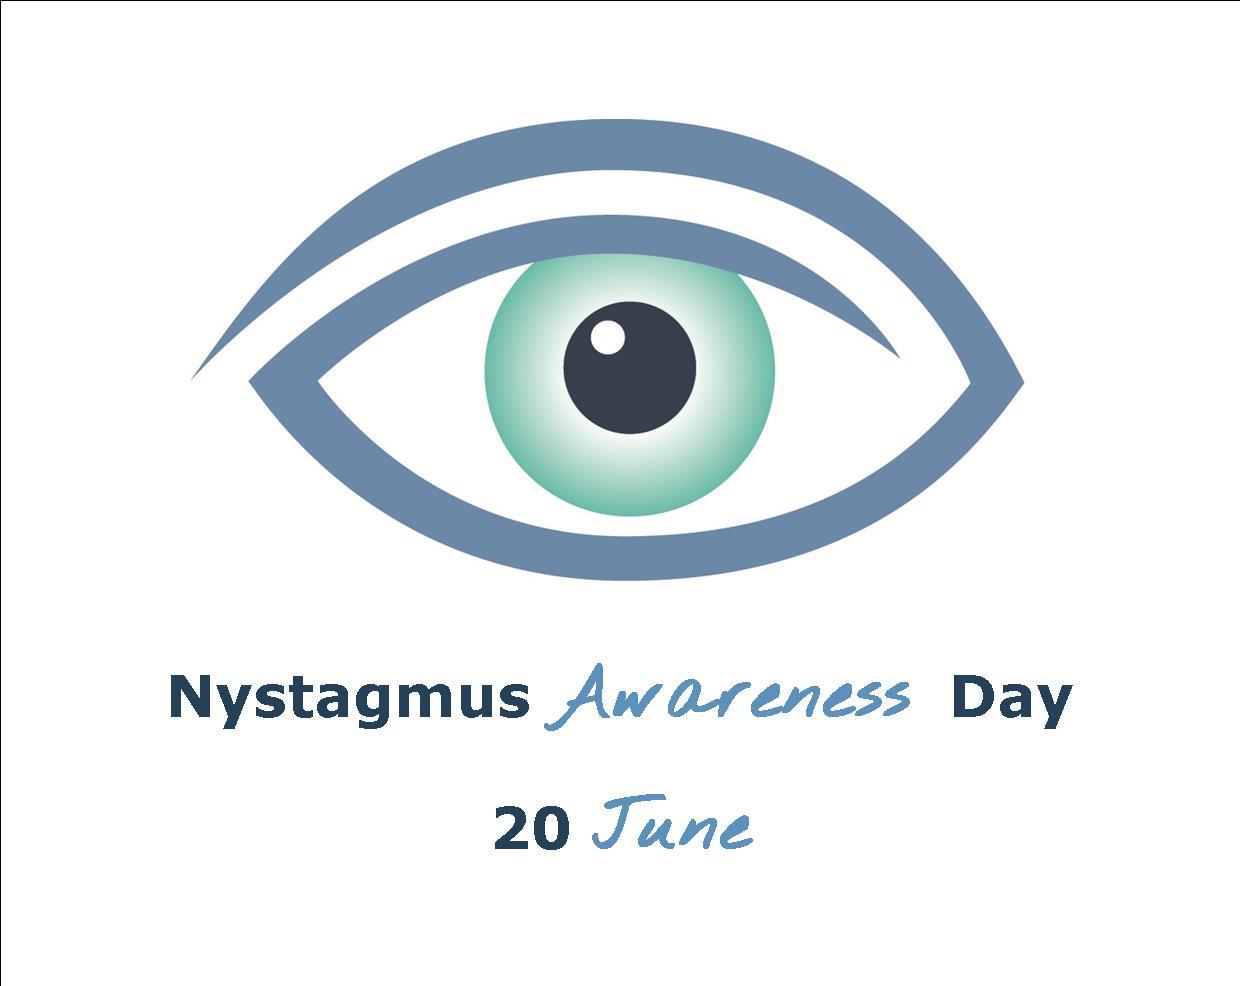 Nystagmus Awareness Day 20 June logo.